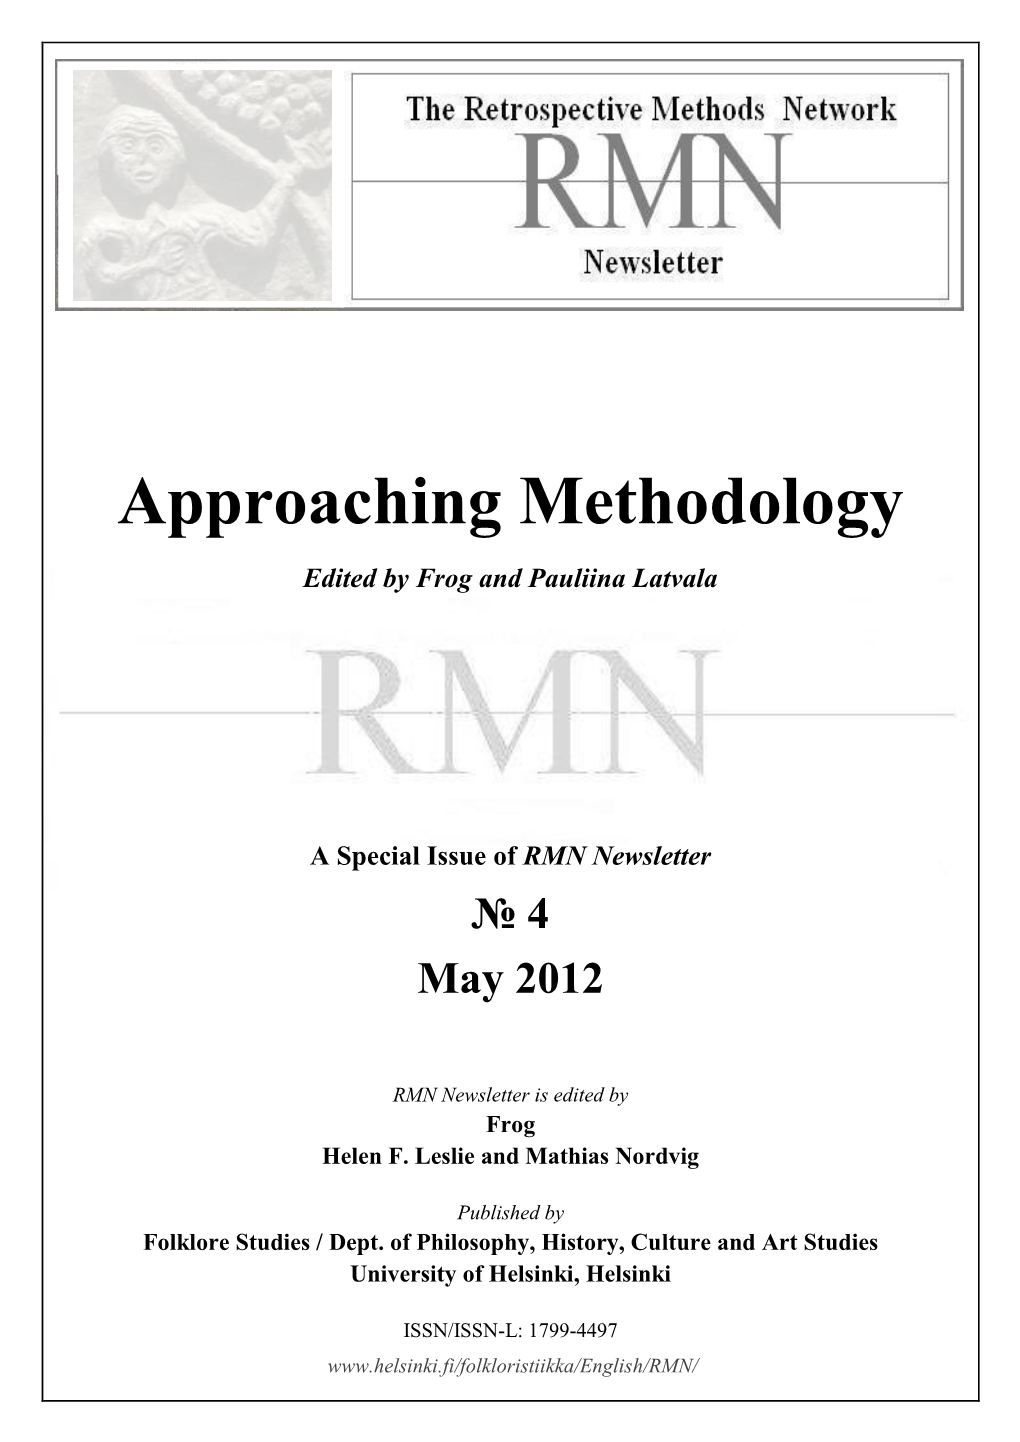 RMN Newsletter 4: Approaching Methodology 2012